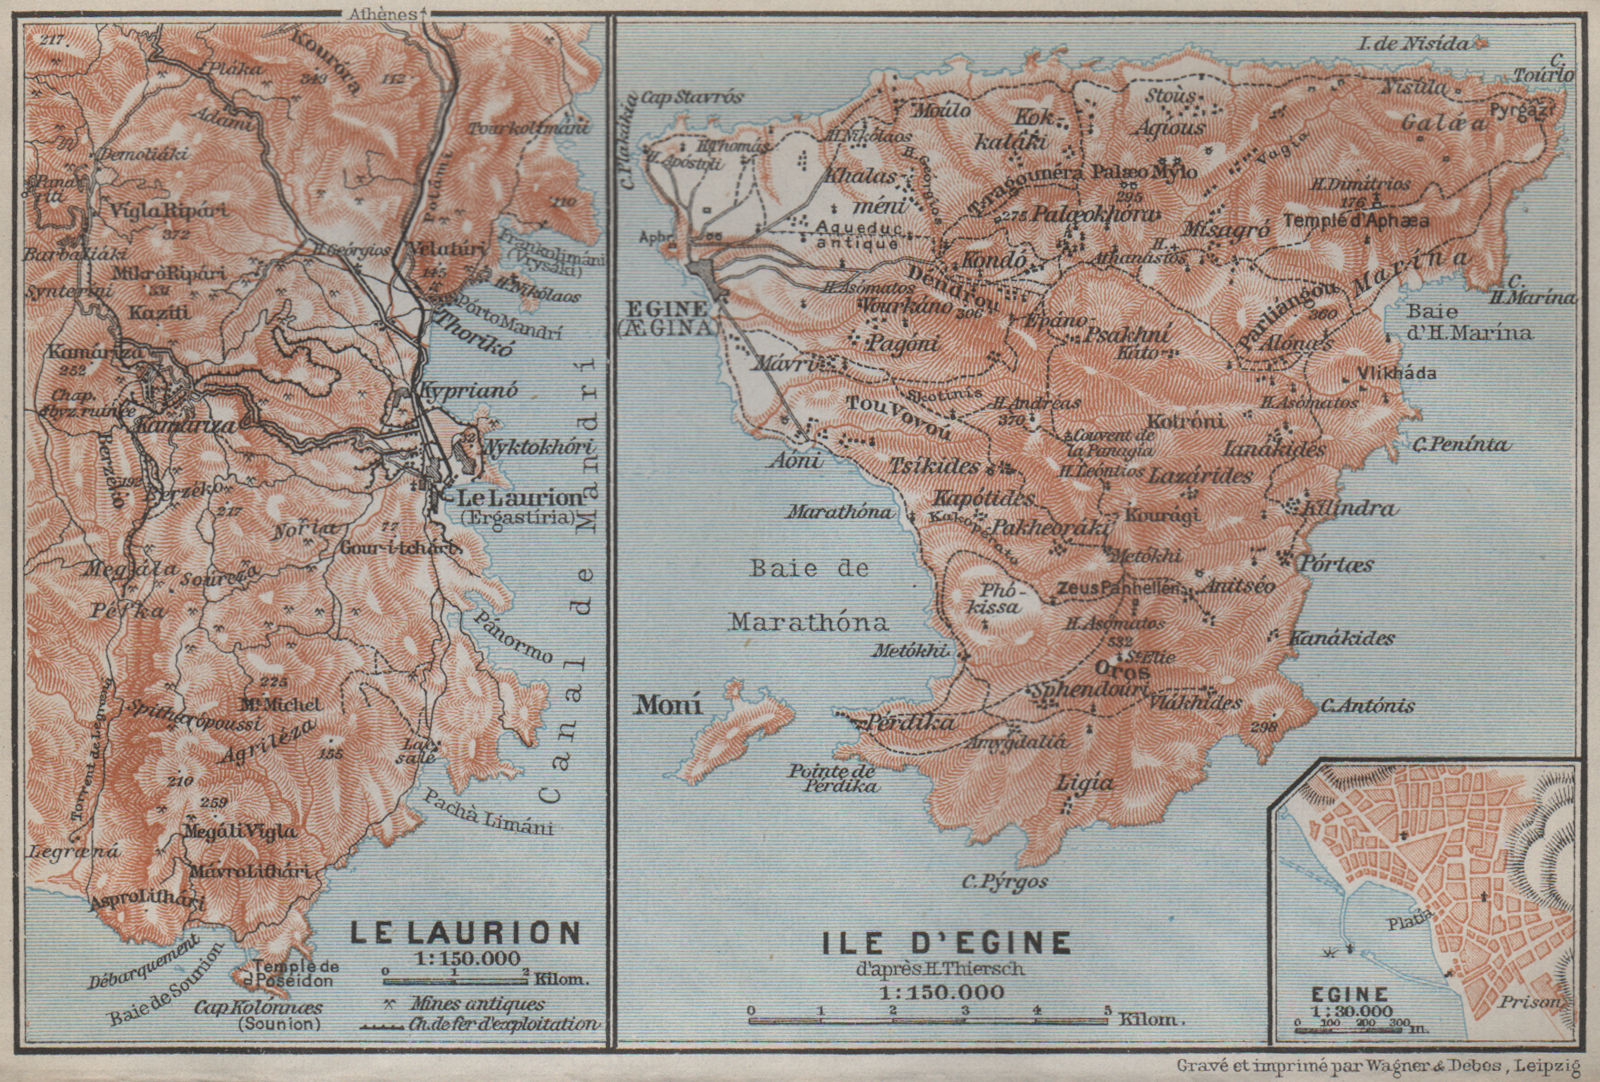 AEGINA island & LAURIUM / LAVRIO. Egina plan. Topo-map. Greece 1909 old